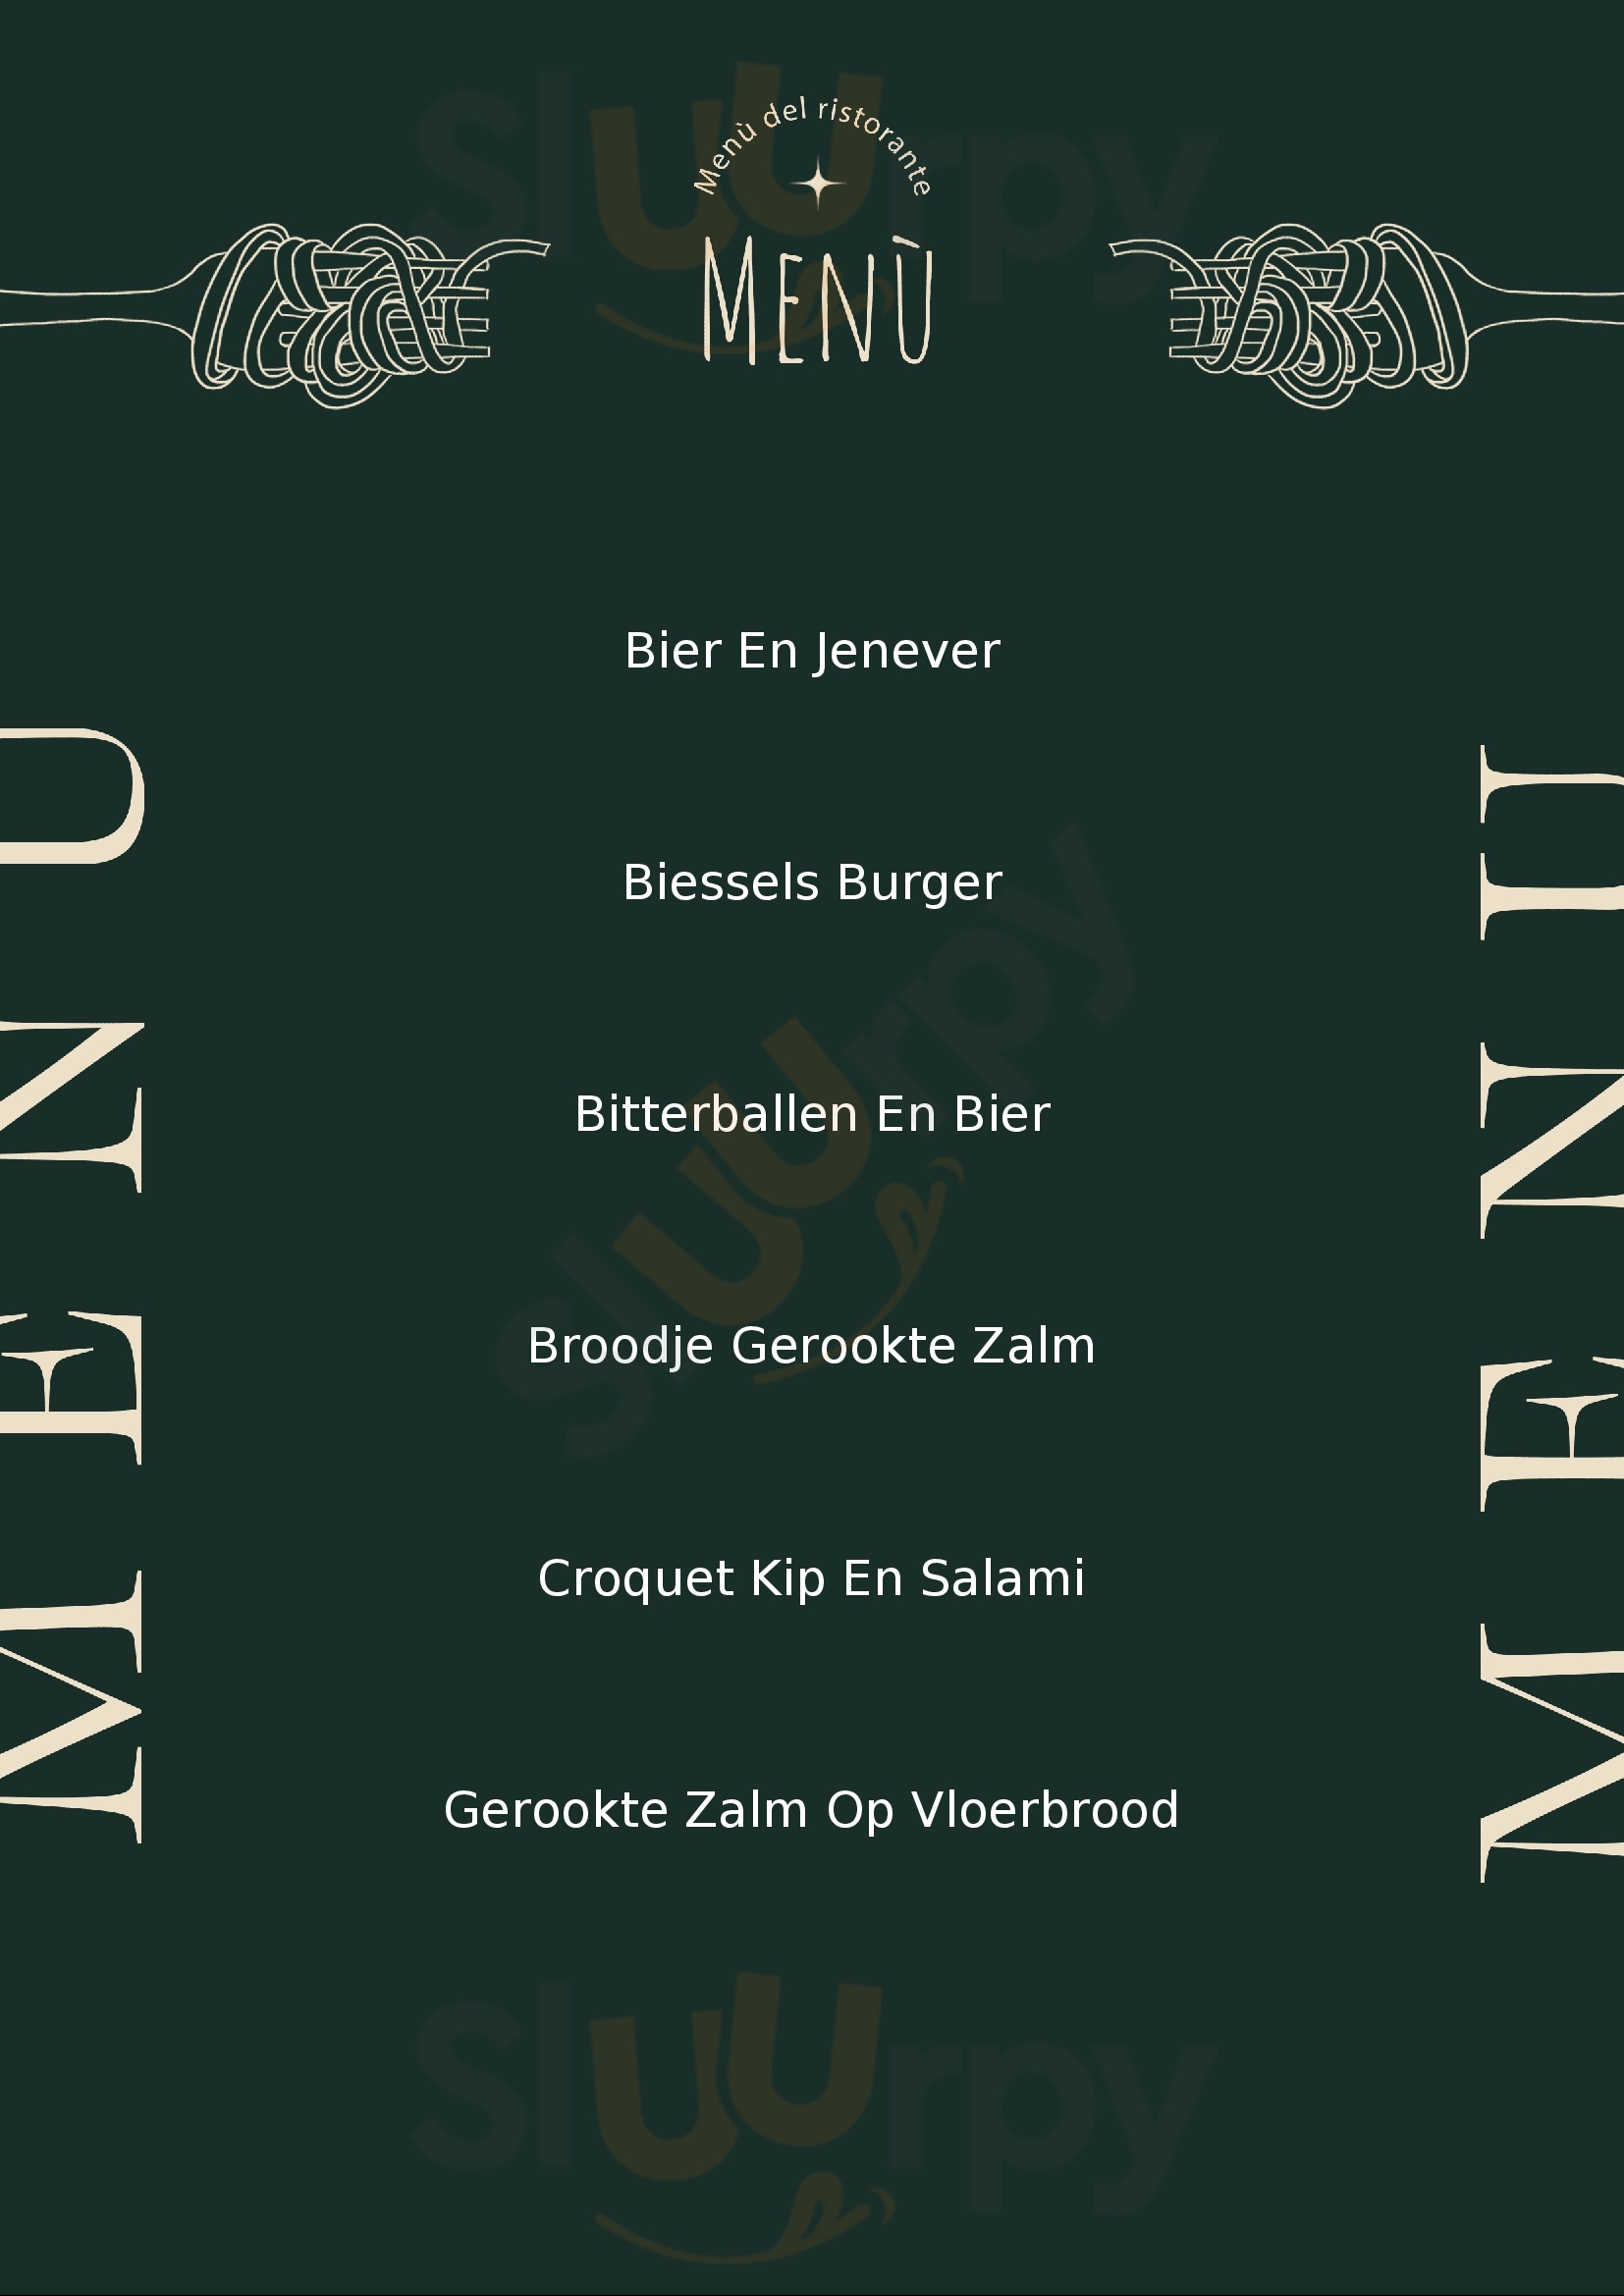 Grand Café Moenen Nijmegen Menu - 1